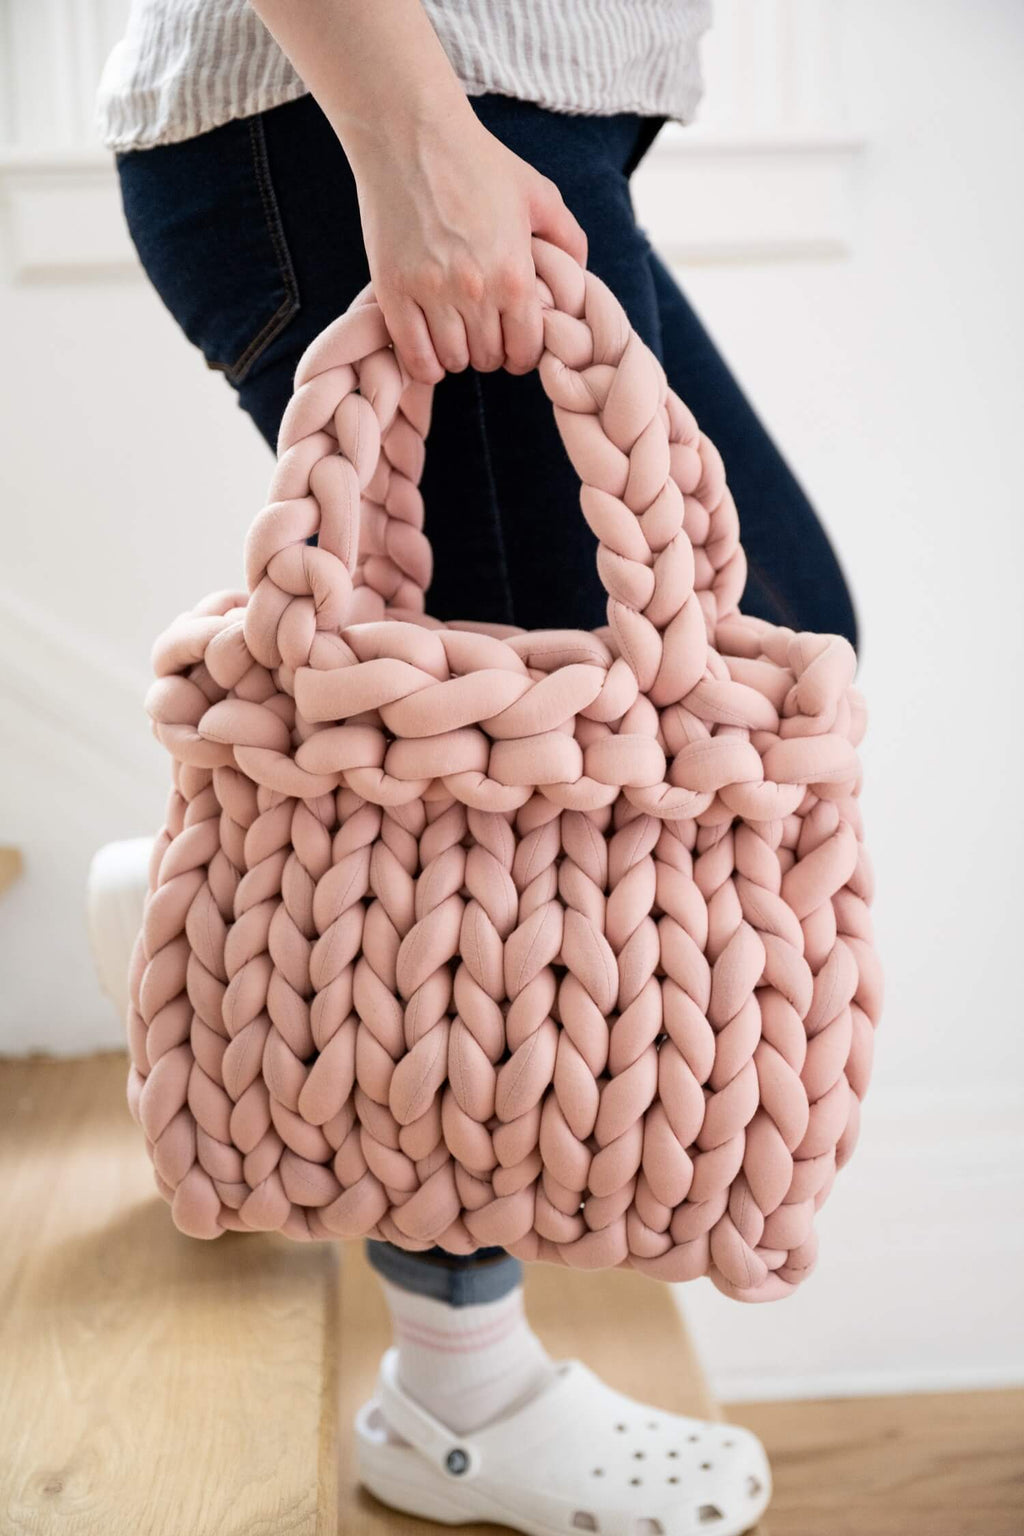 Crochet Bags Tutorial - Shelley Husband Crochet